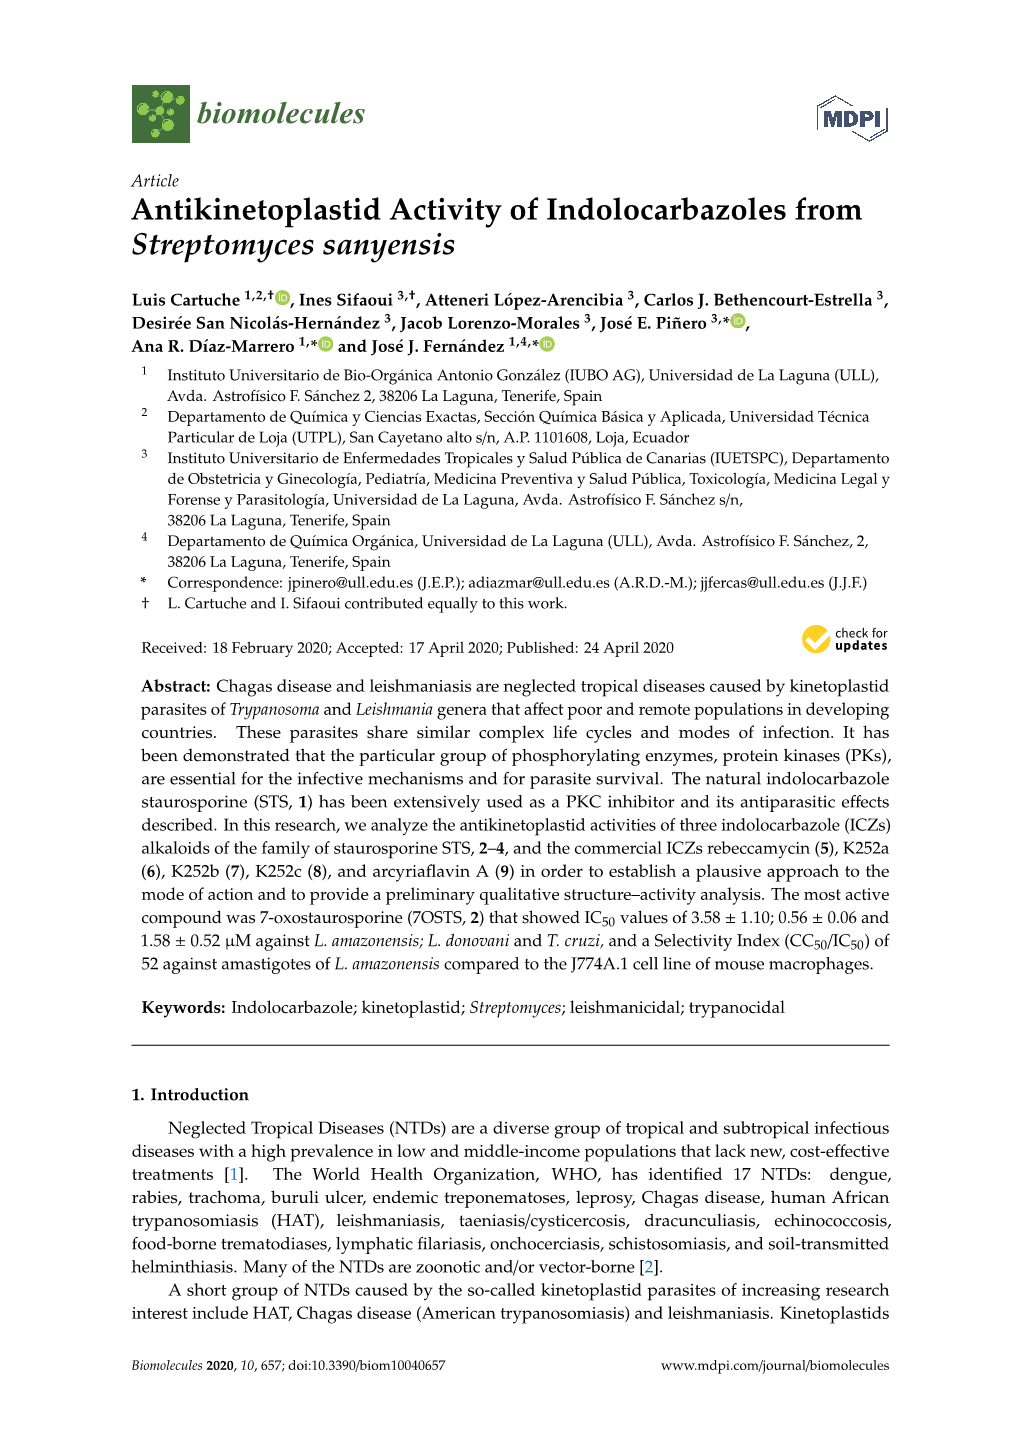 Antikinetoplastid Activity of Indolocarbazoles from Streptomyces Sanyensis